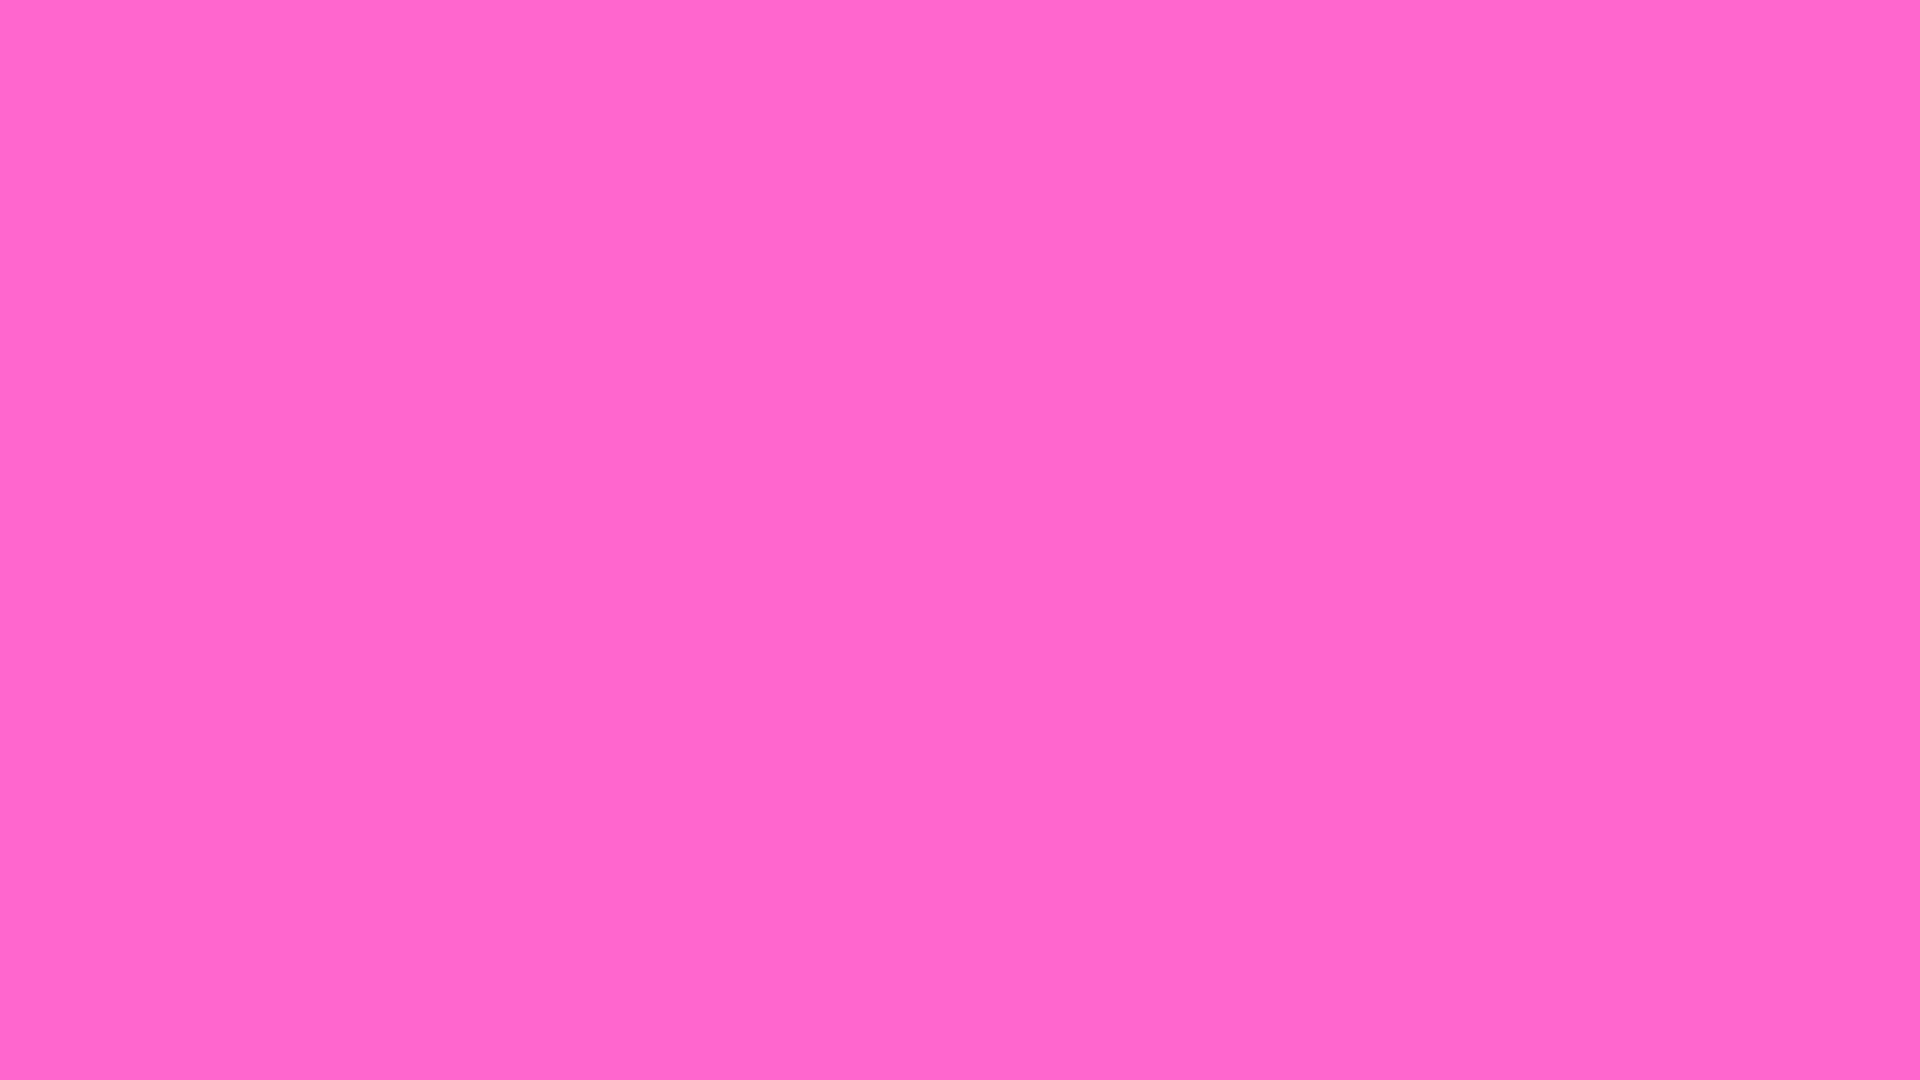 1920x1080 Rose Pink Solid Color Background. 